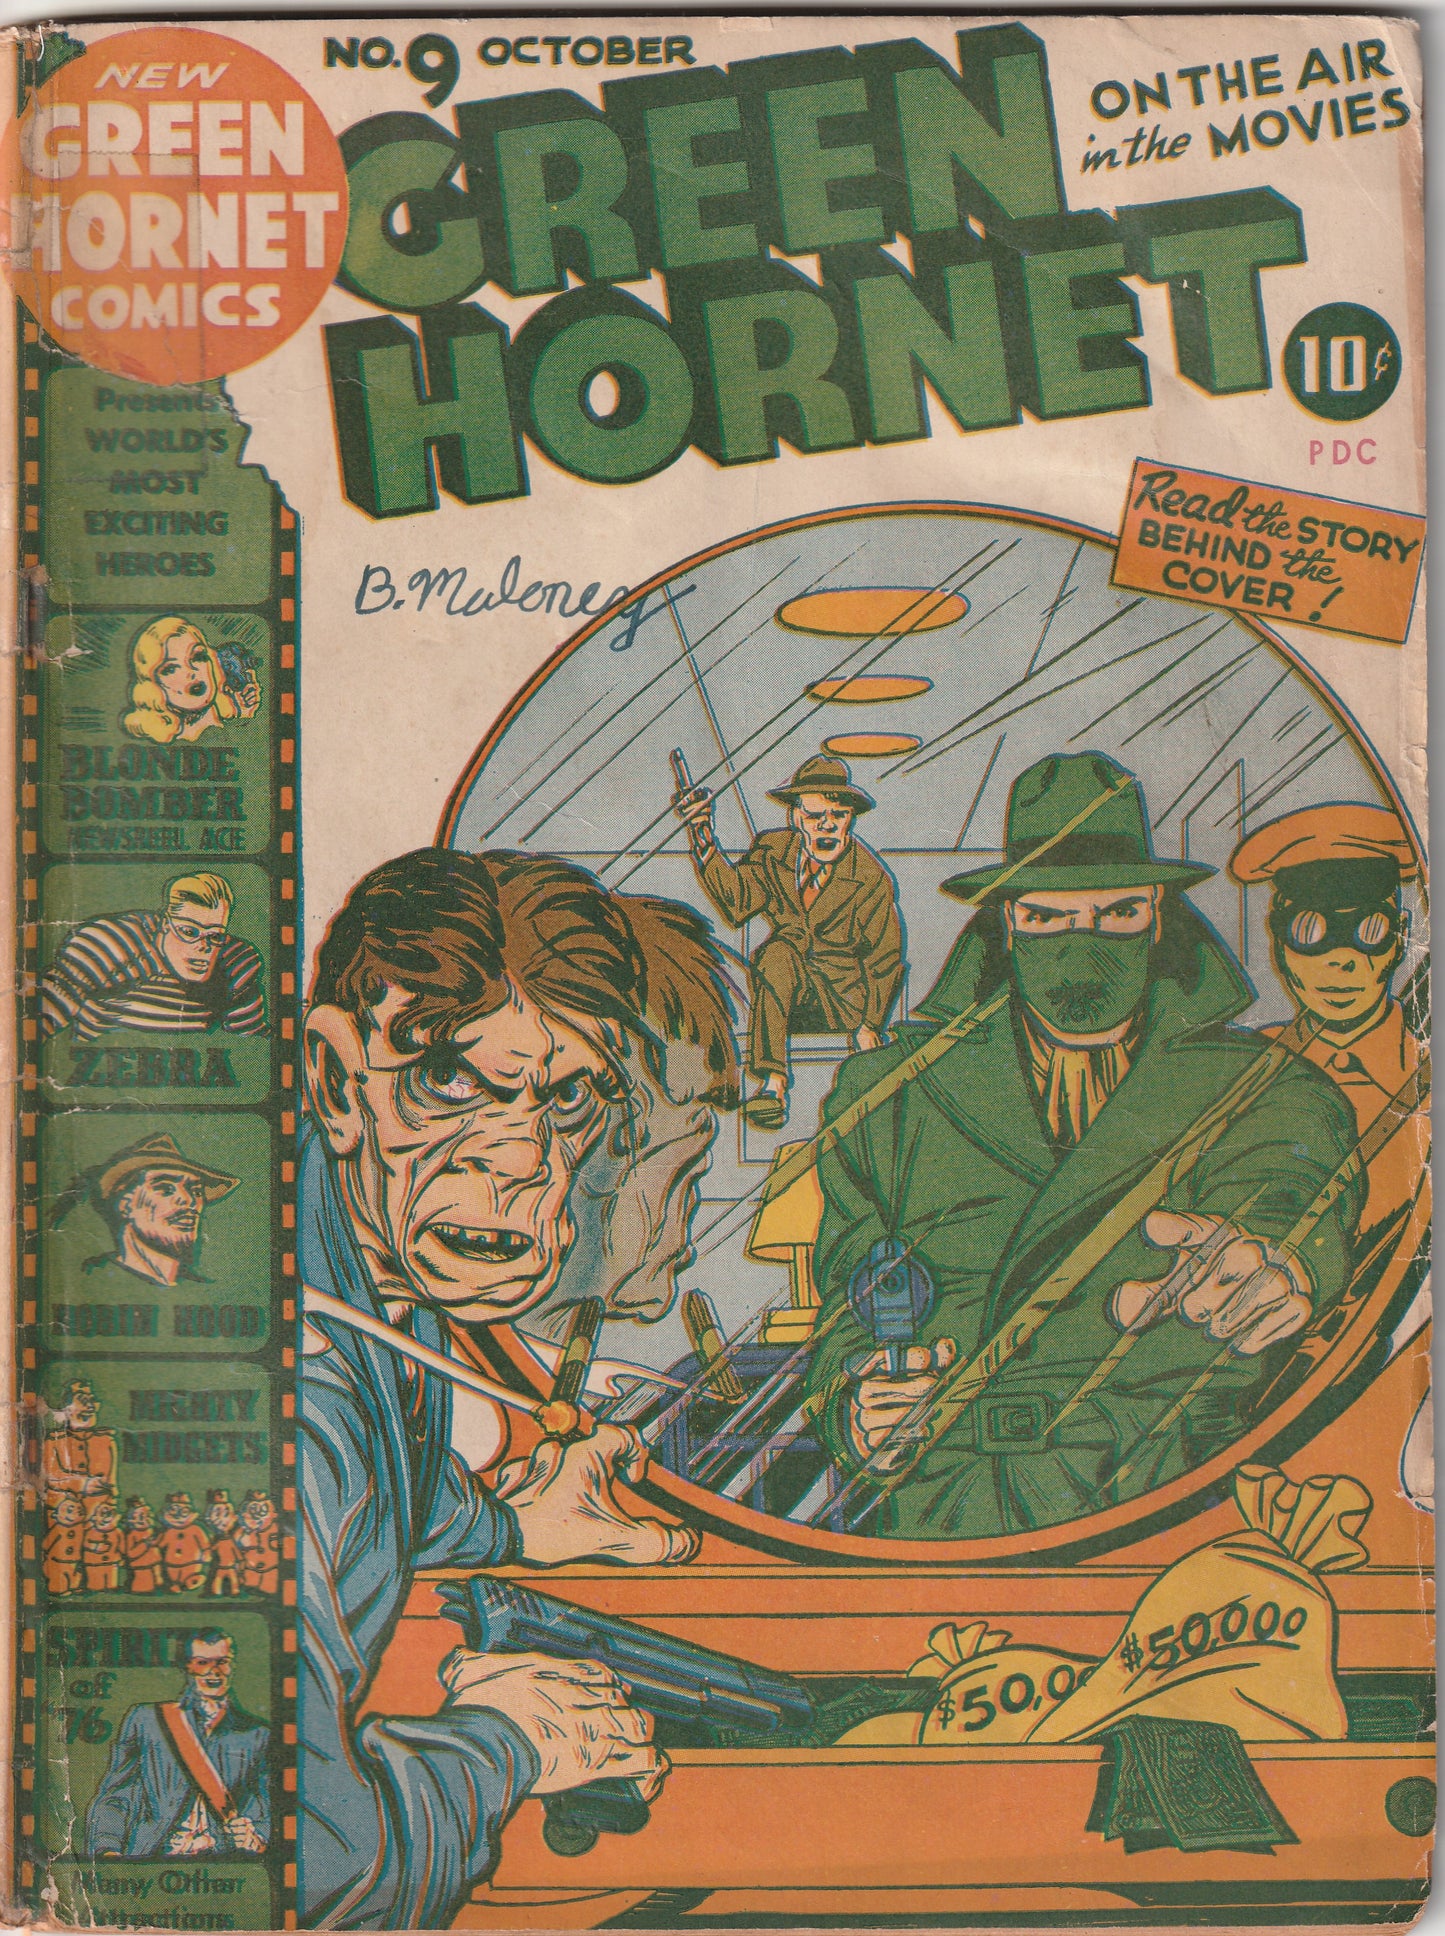 Green Hornet Vol 1 #9 (1942) - Jack Kirby cover